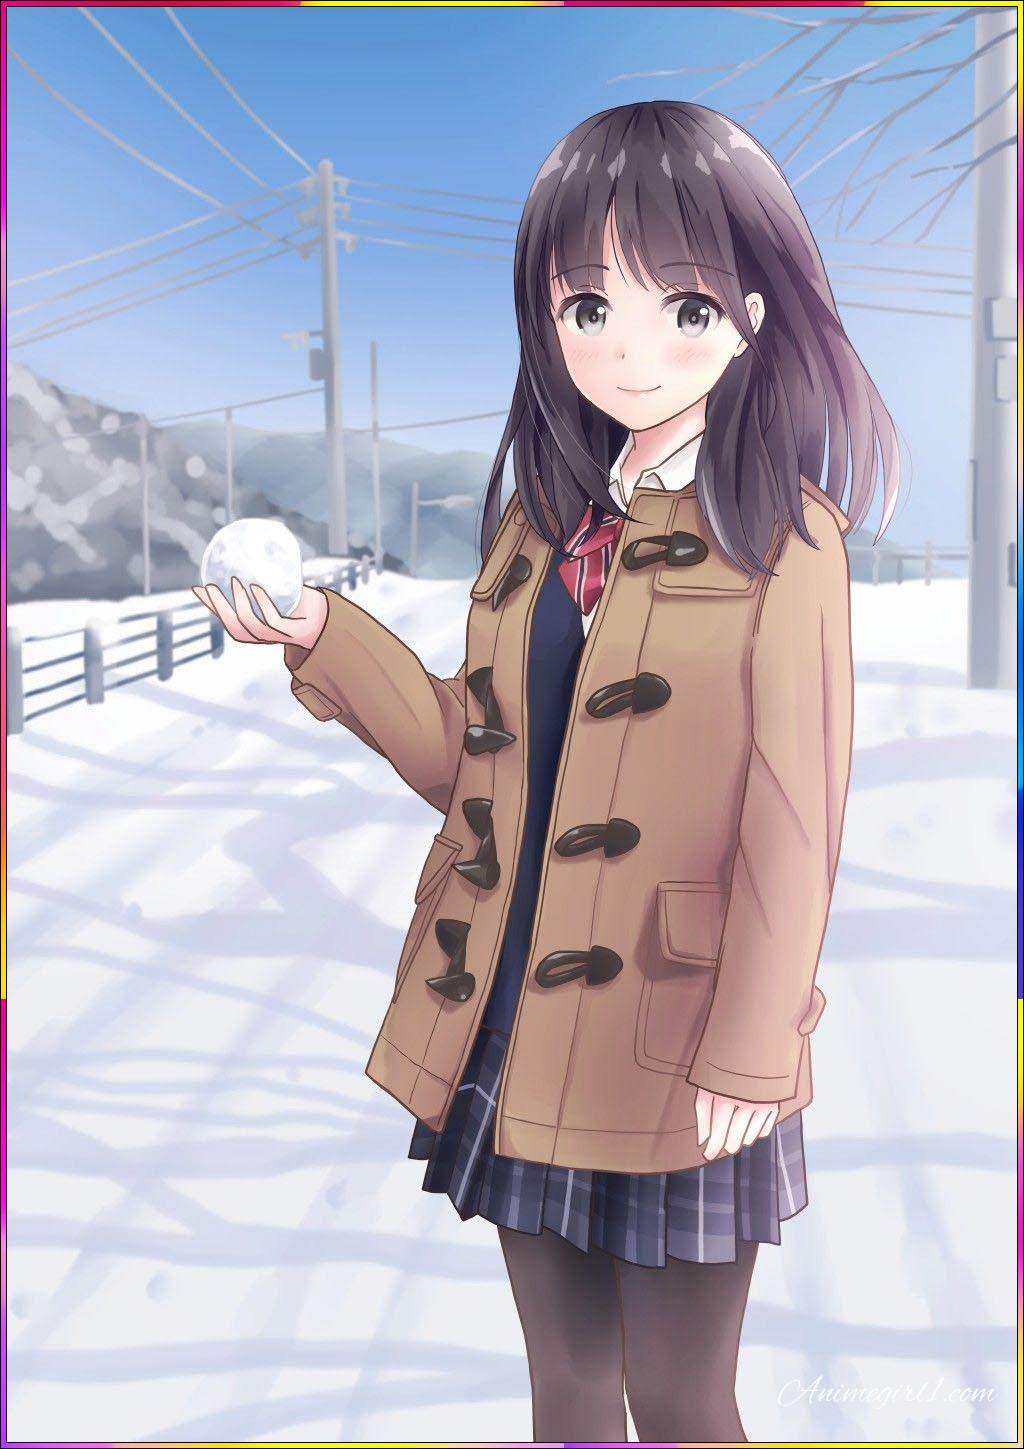 anime girl playing with ice